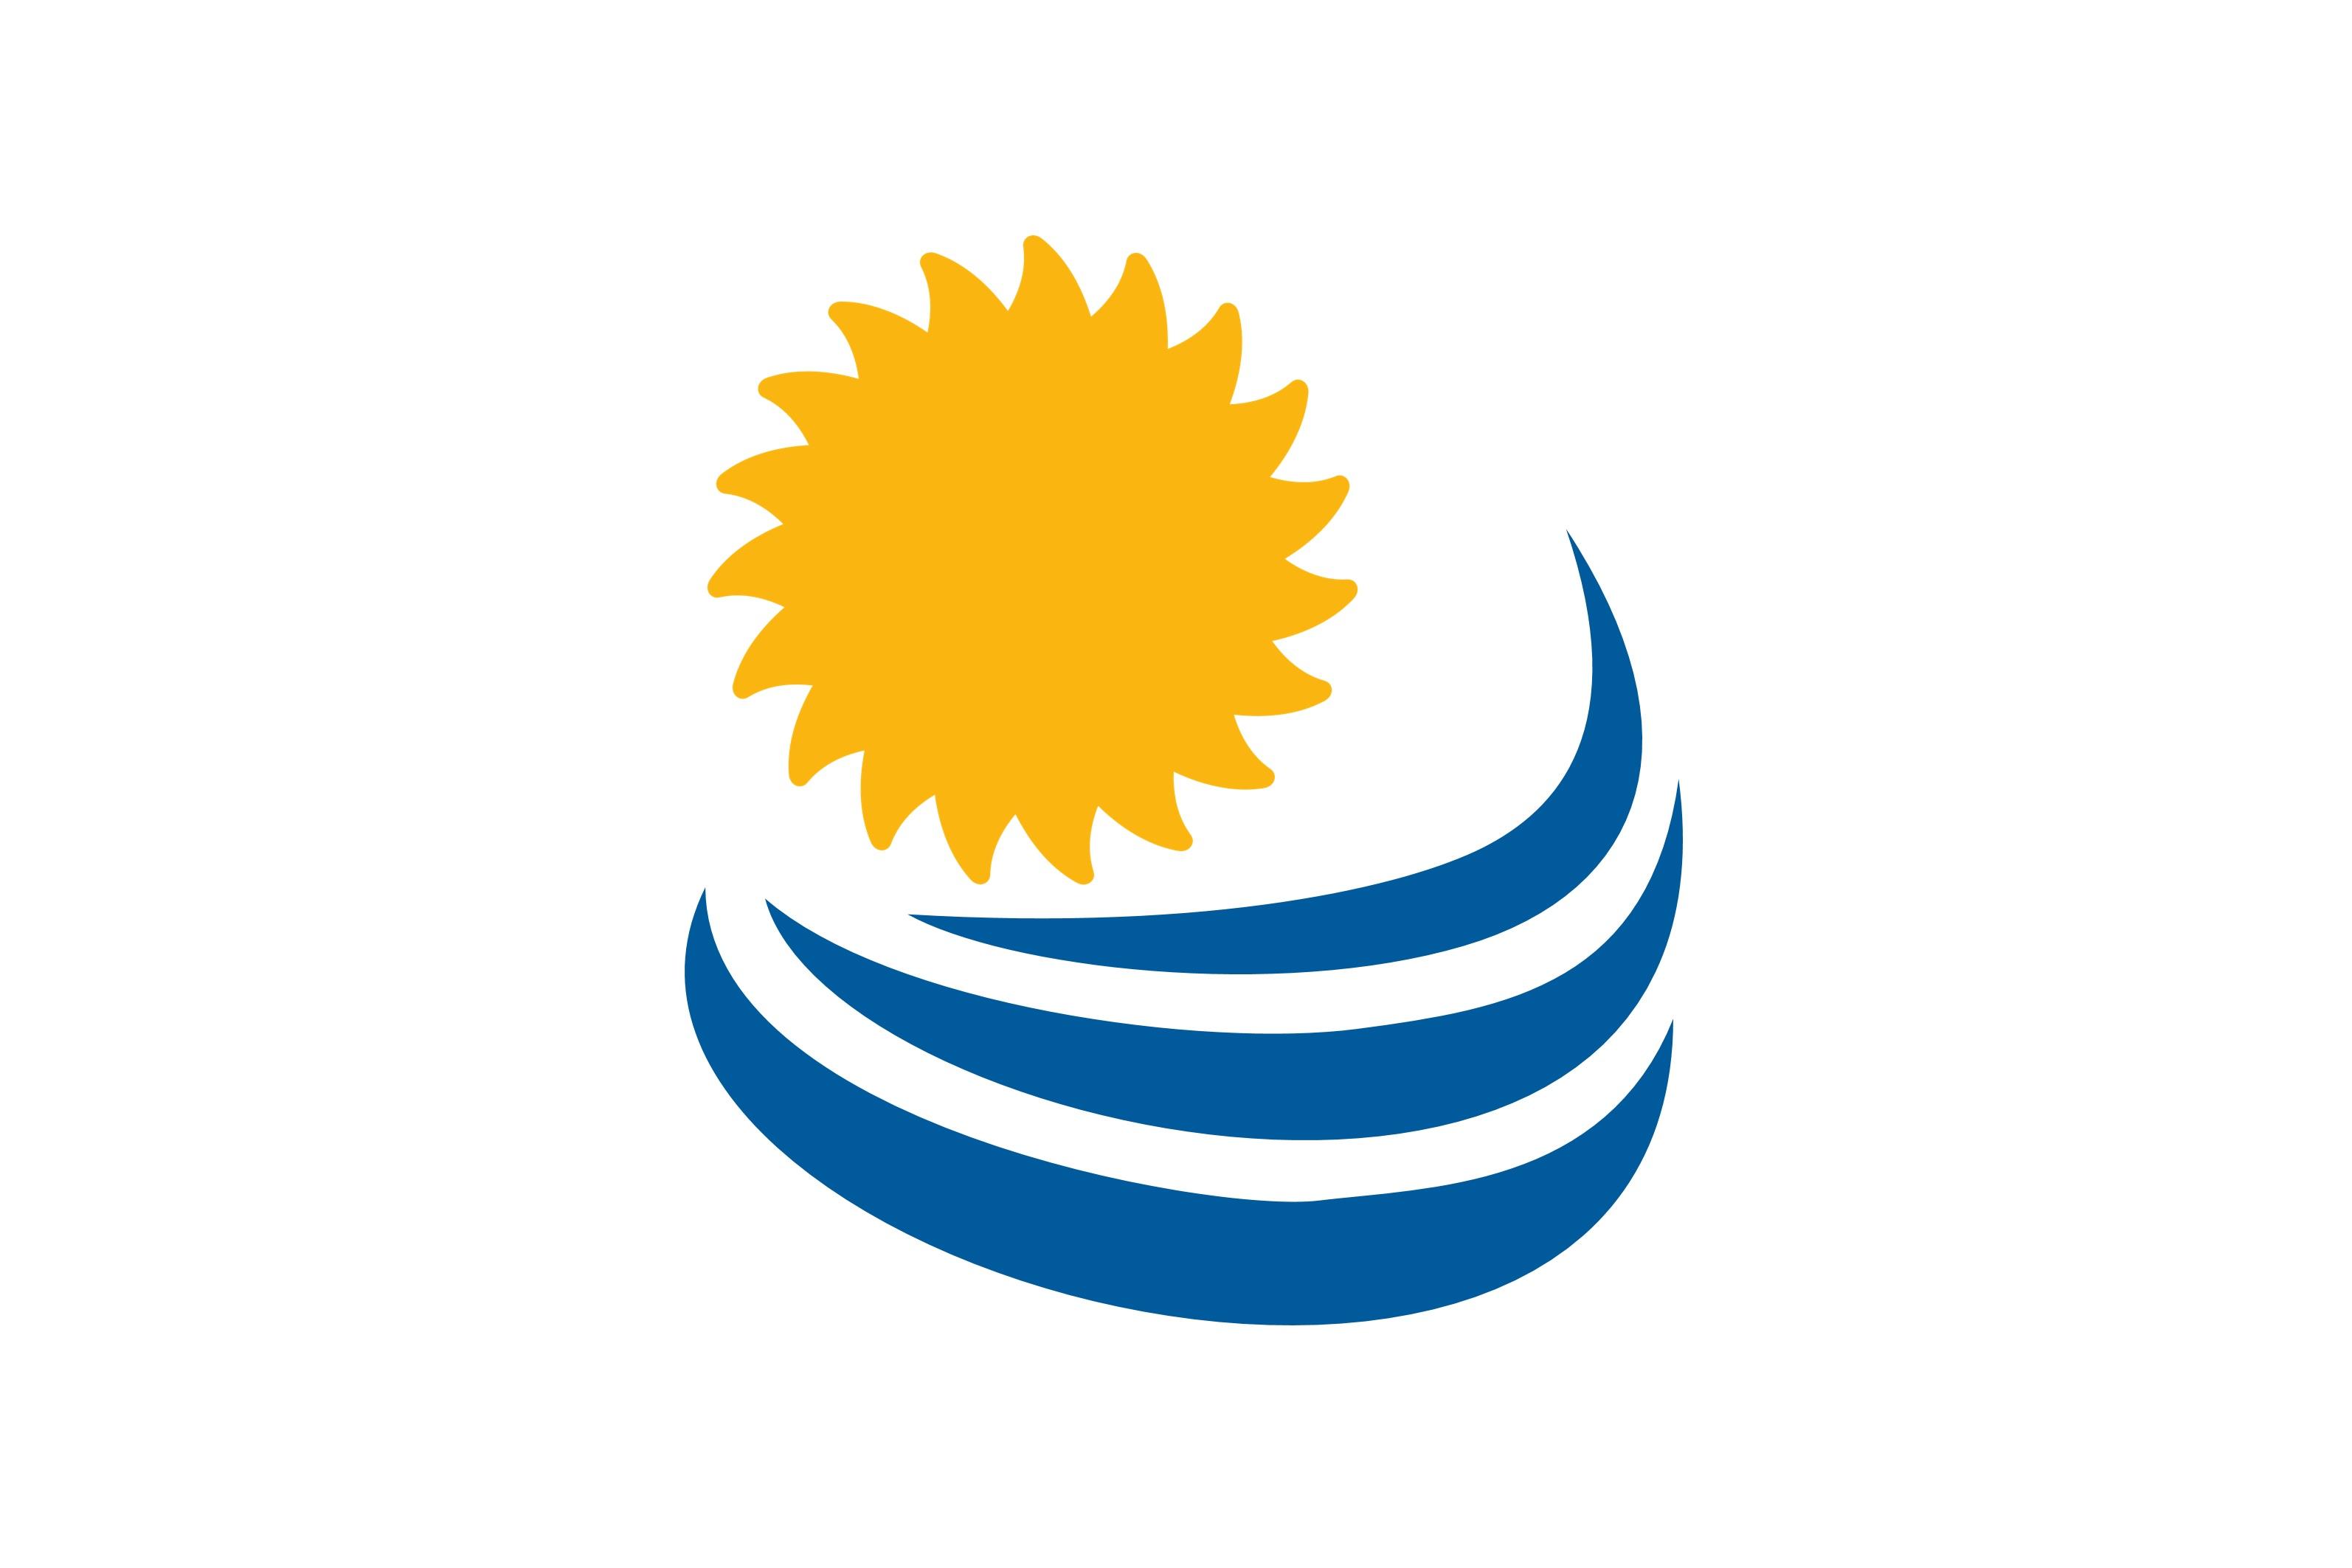 Uruguay Logo - Flag of Uruguay as a Japanese Prefecture